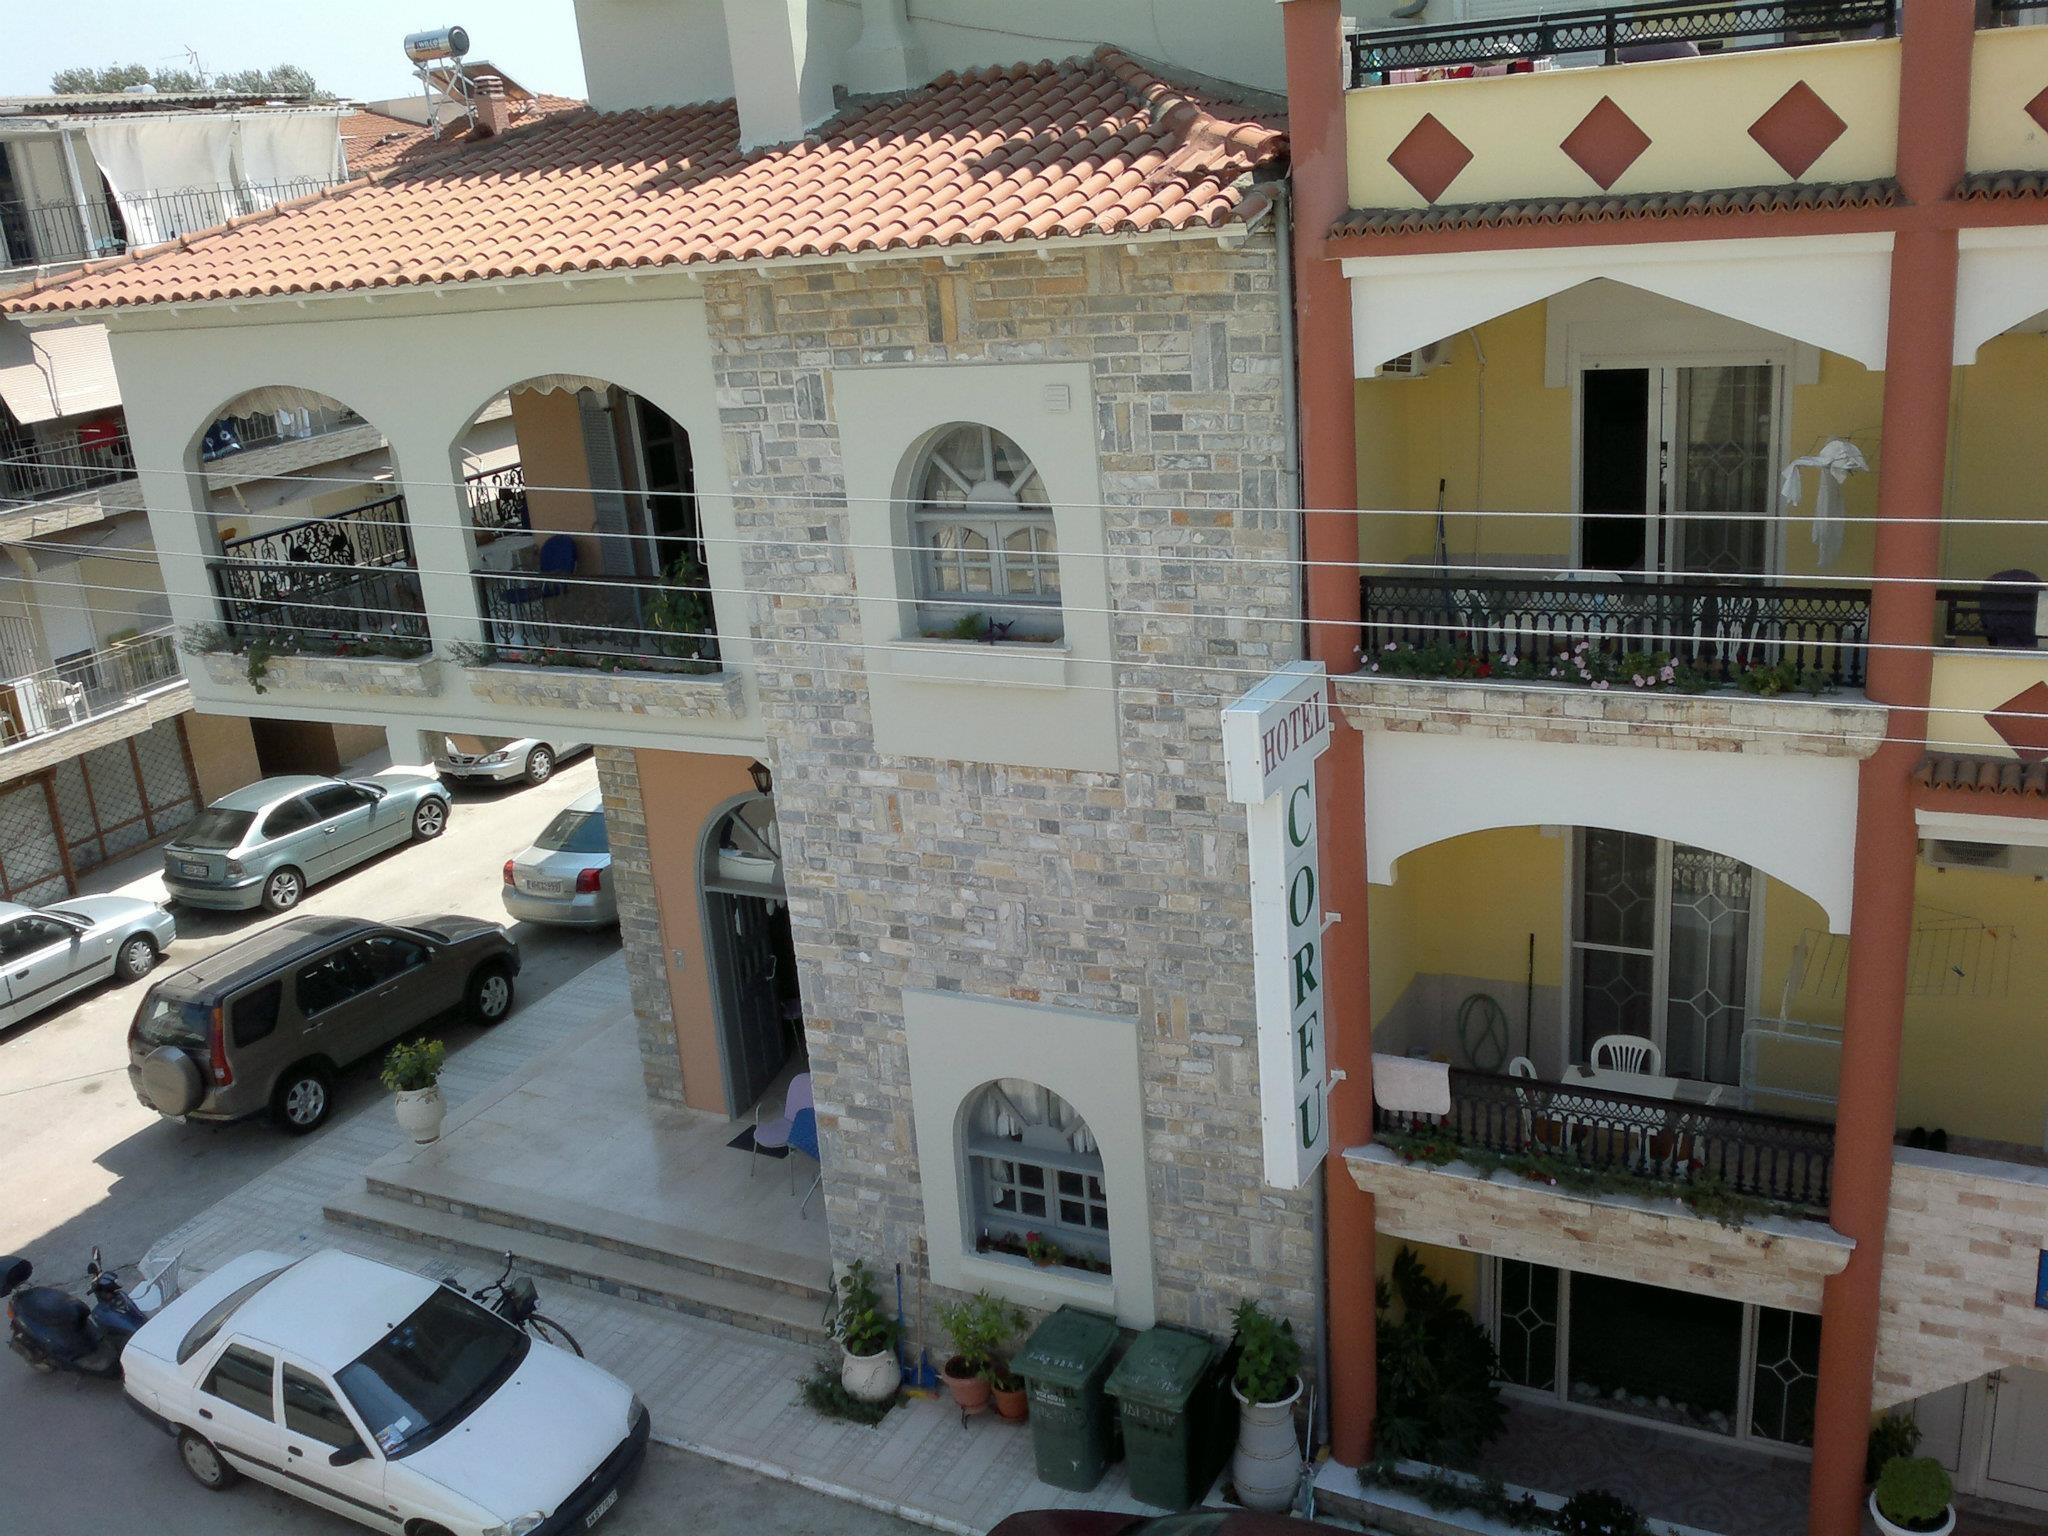 Hotel App Corfu, Kasandra - Nea Flogita